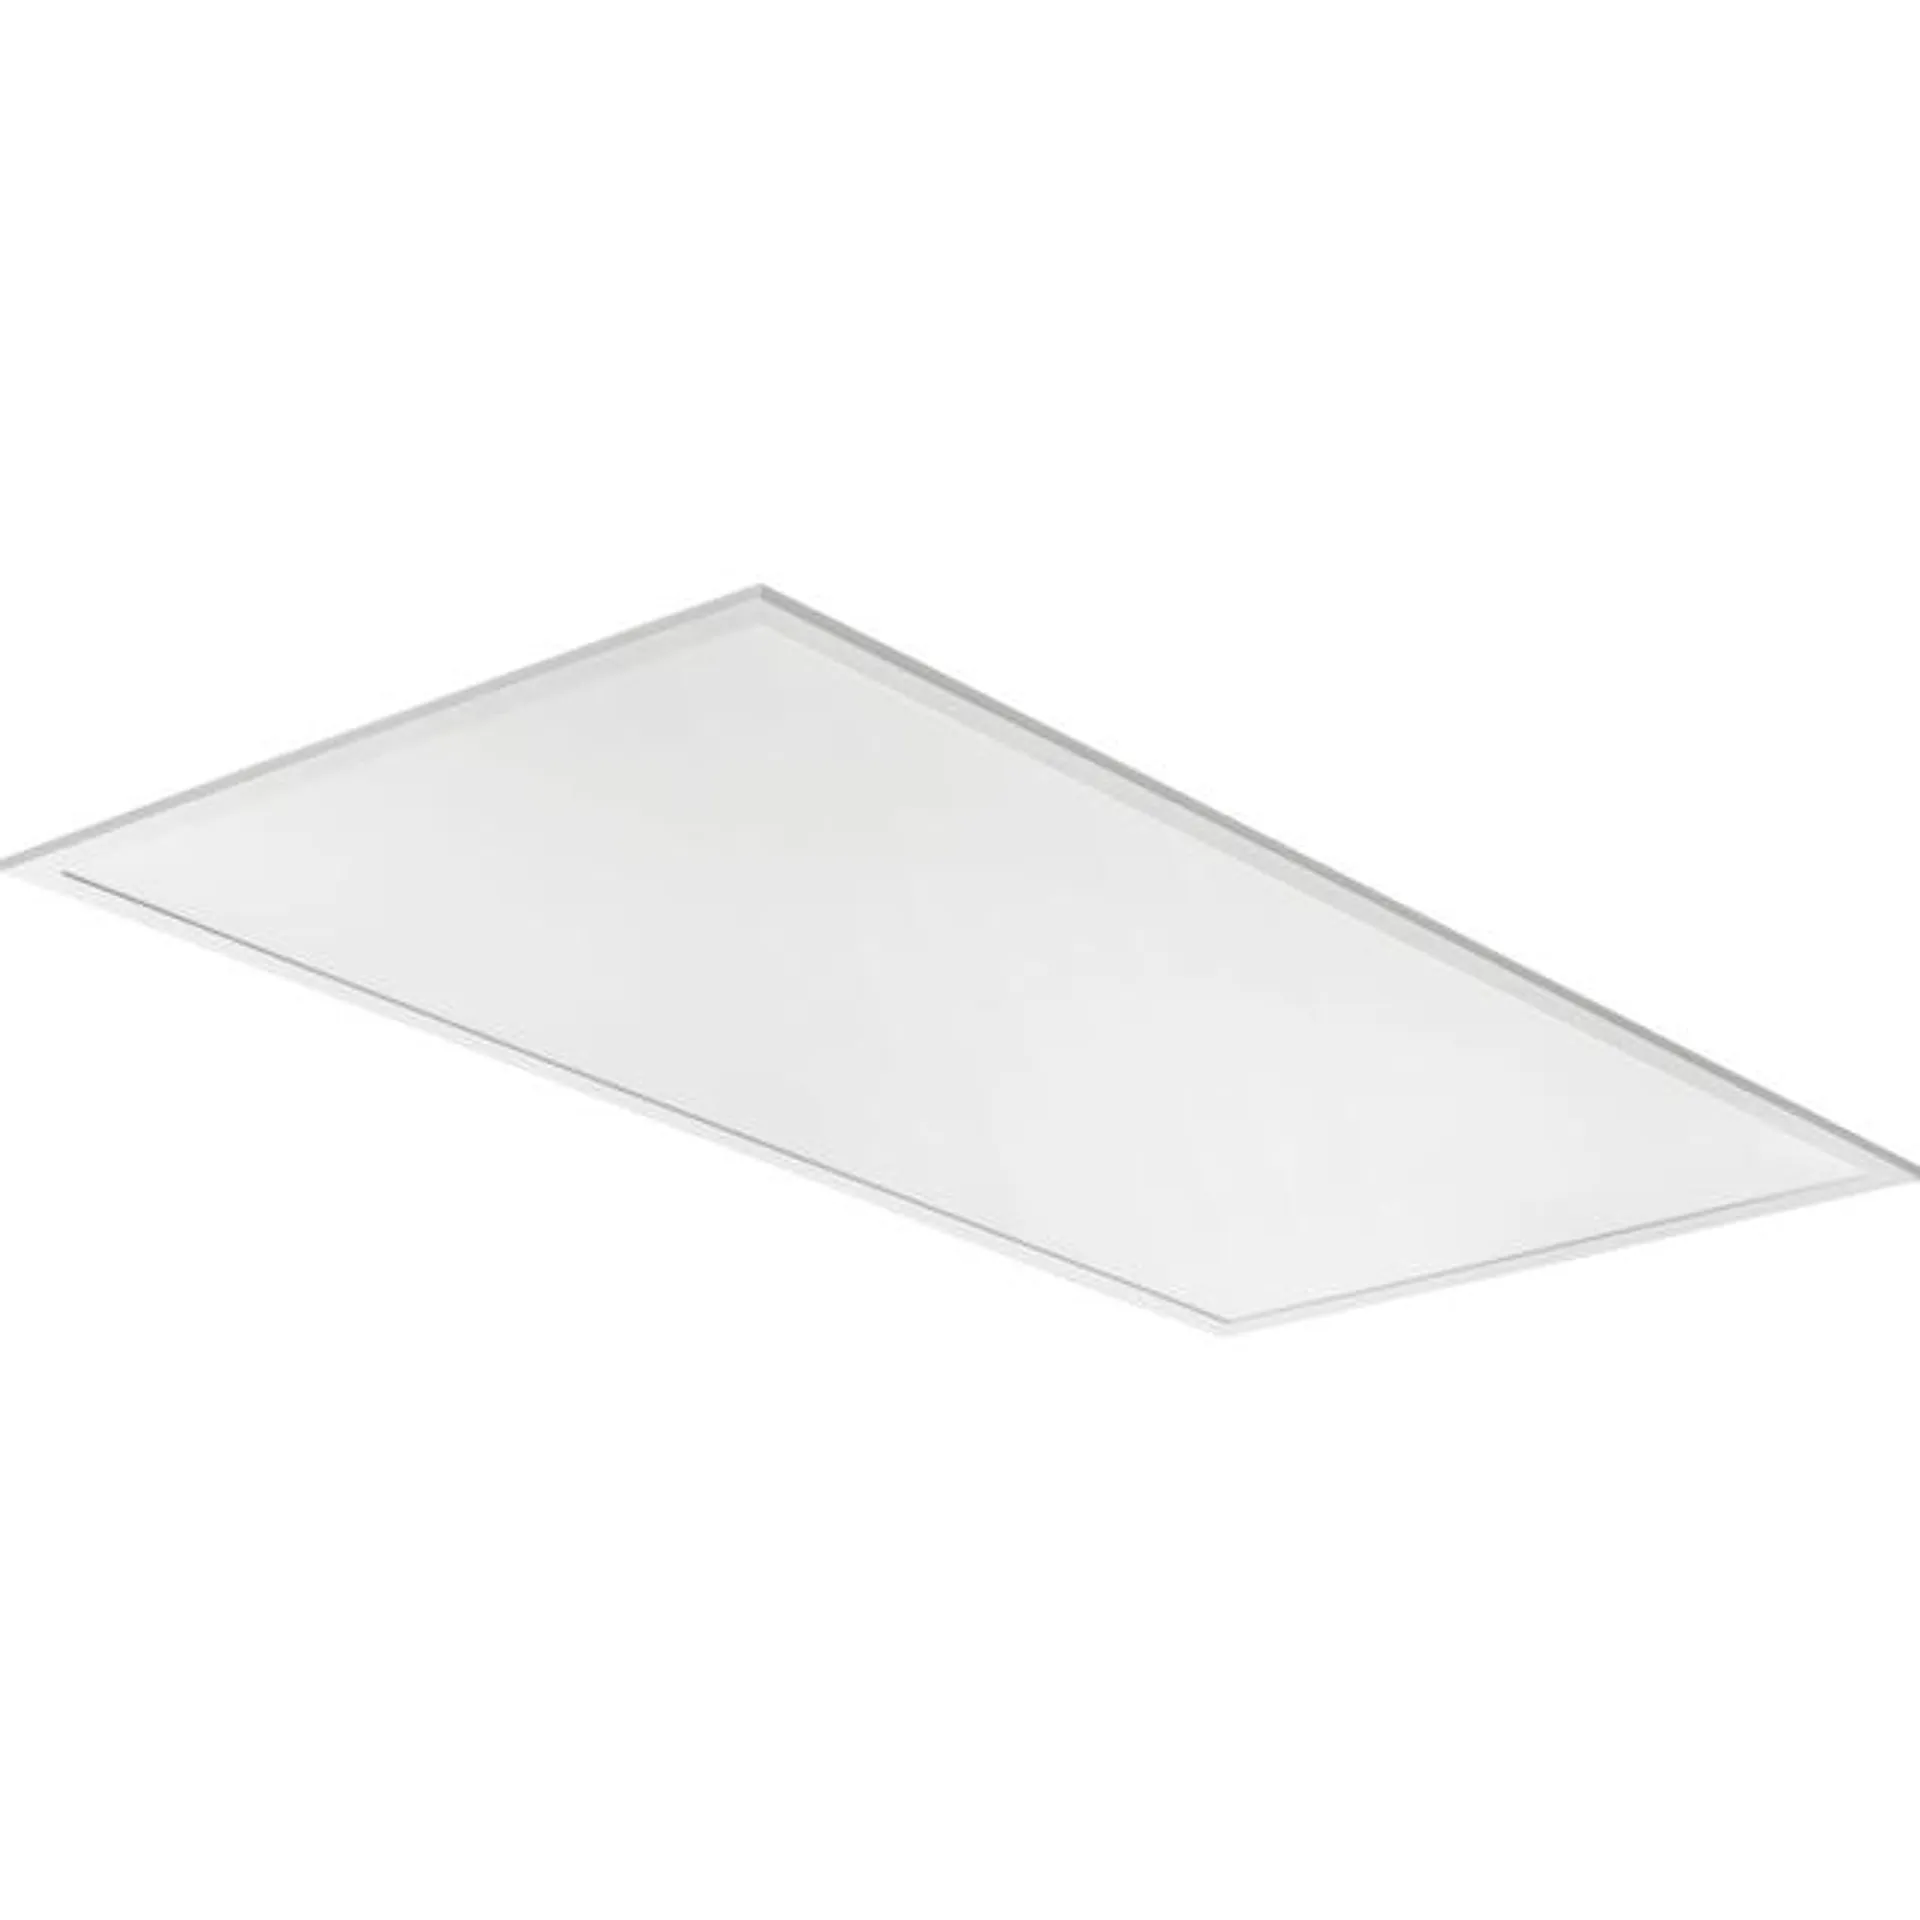 Lithonia Lighting 4-ft x 2-ft Adjustable Lumens Switchable White LED Panel Light